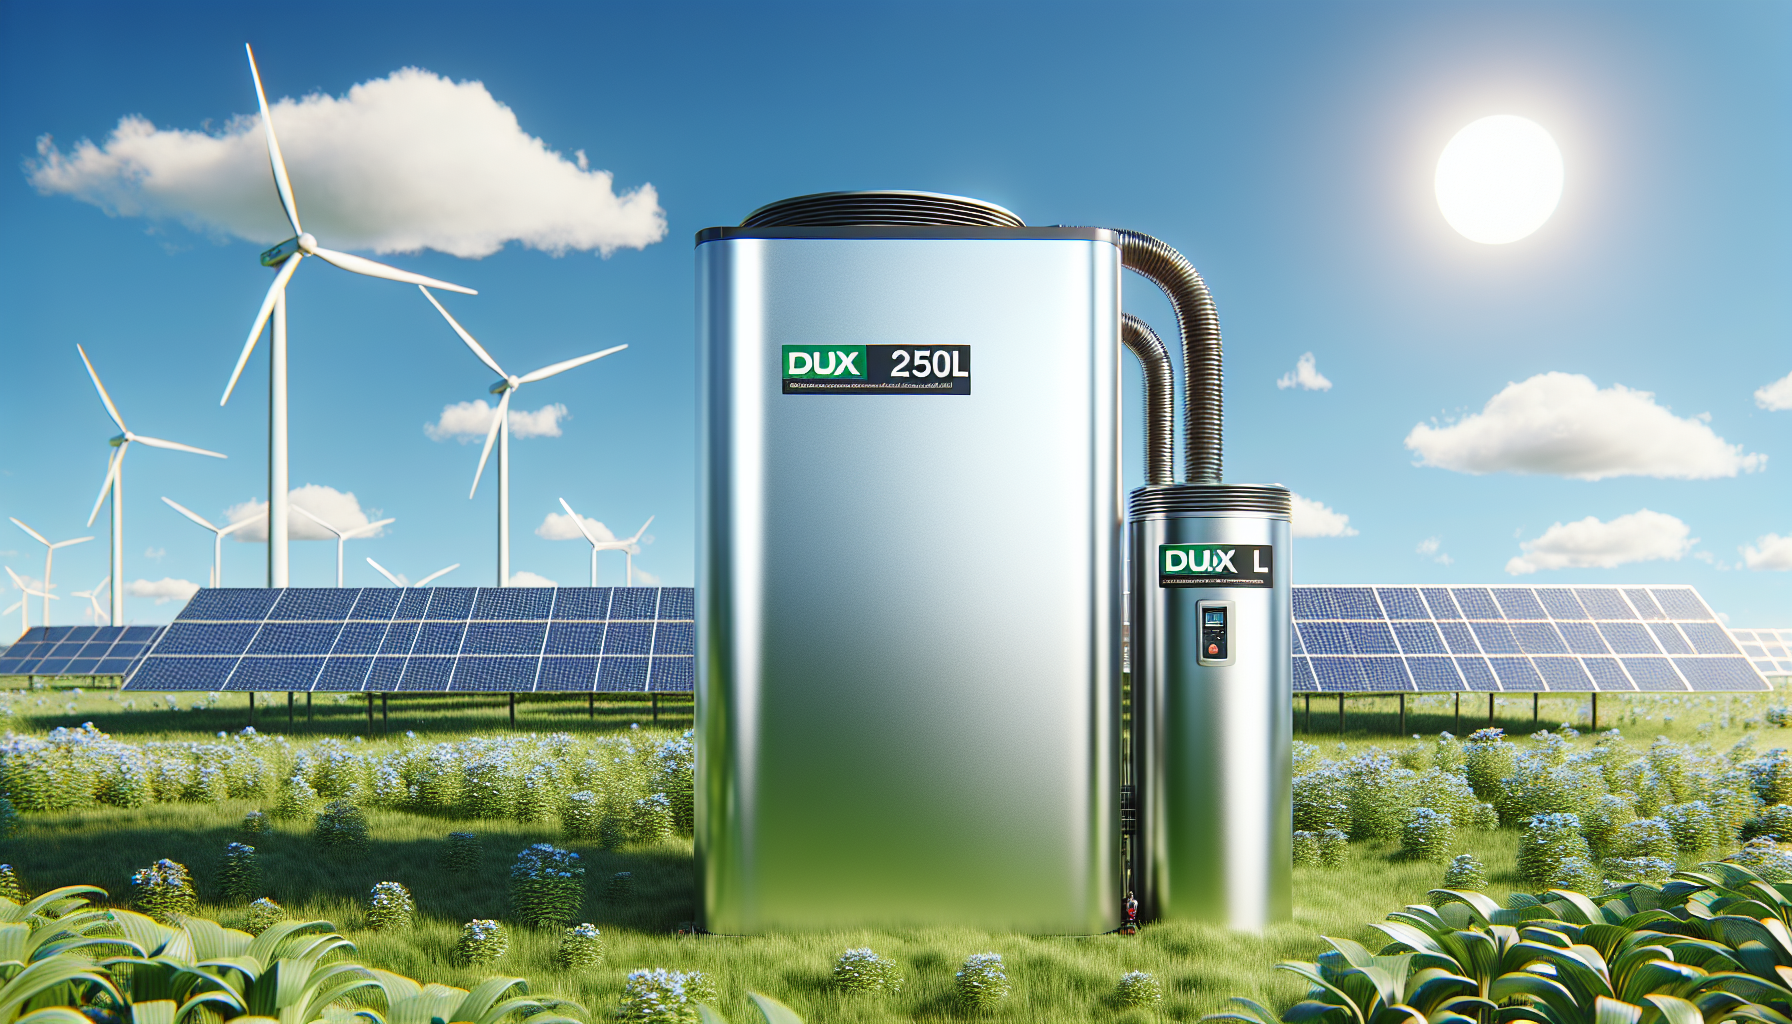 Dux 250L System's Environmental Impact